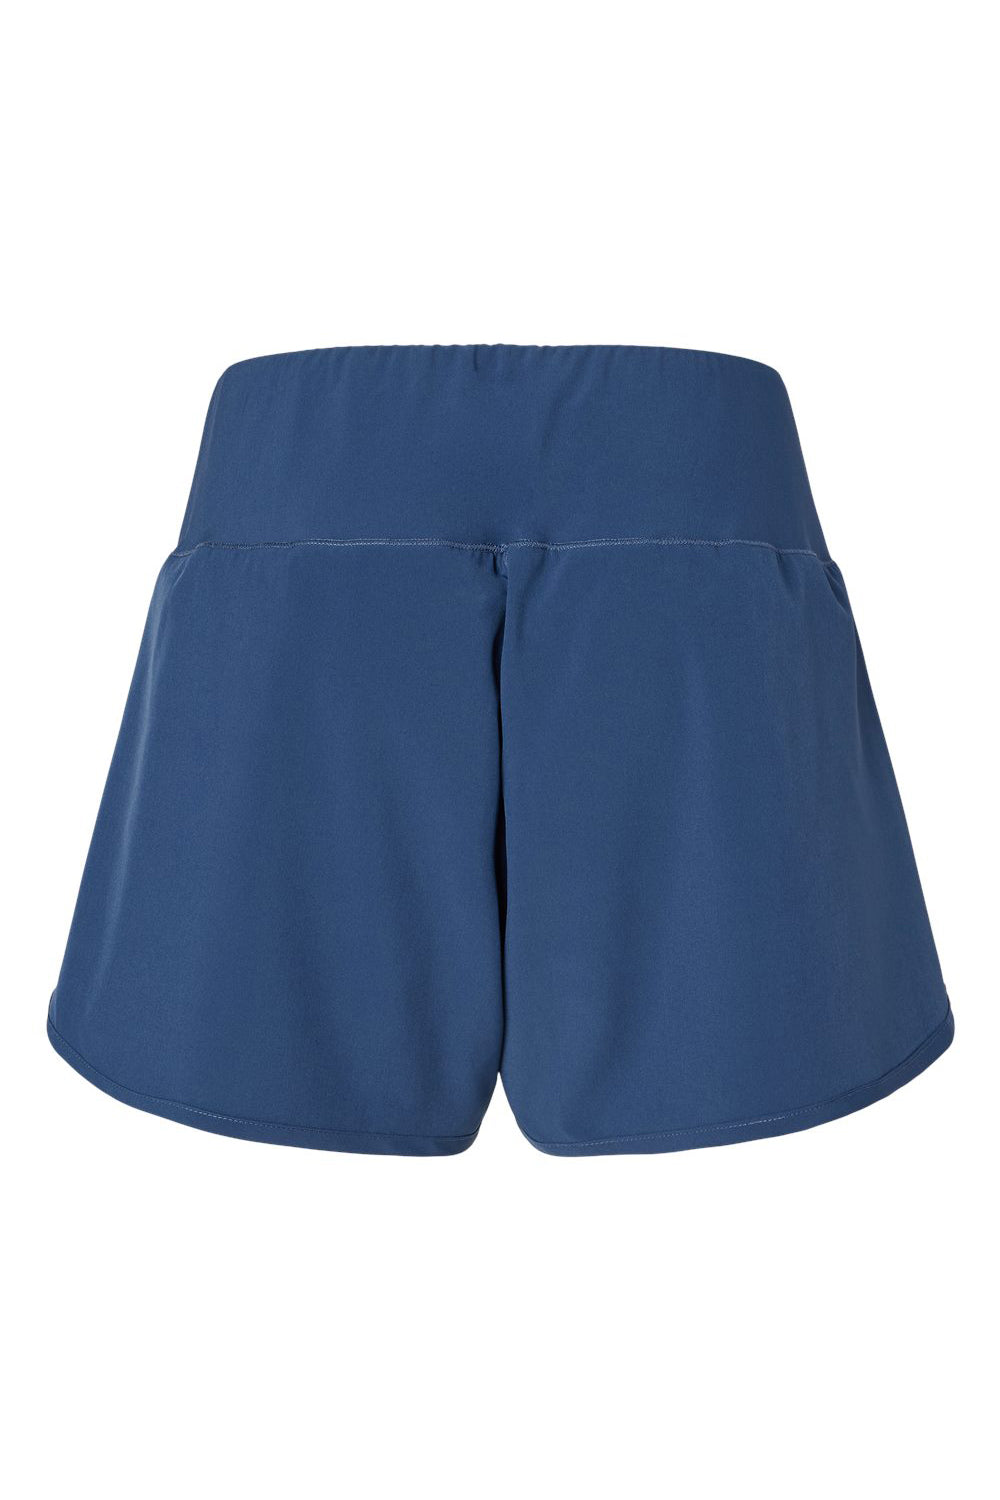 Boxercraft BW6103 Womens Stretch Woven Lined Shorts Indigo Blue Flat Back